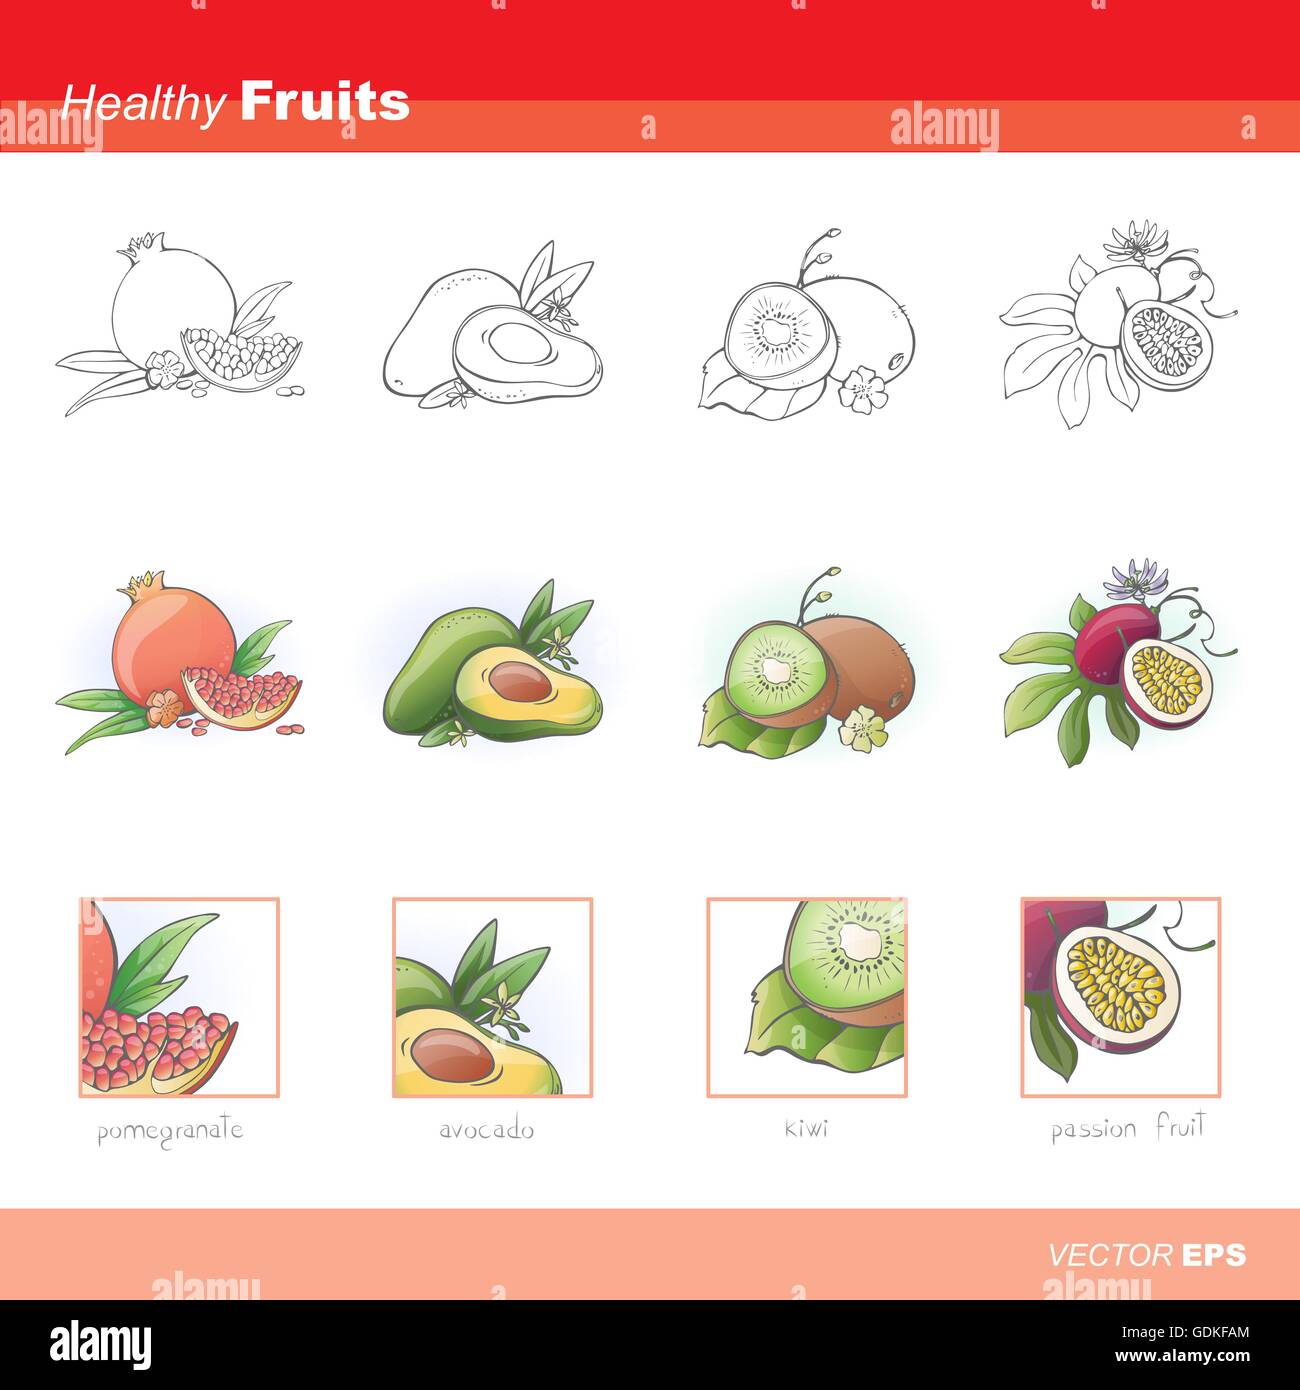 Healthy fruits set: pomegranate, avocado, kiwi and passion fruit Stock Vector